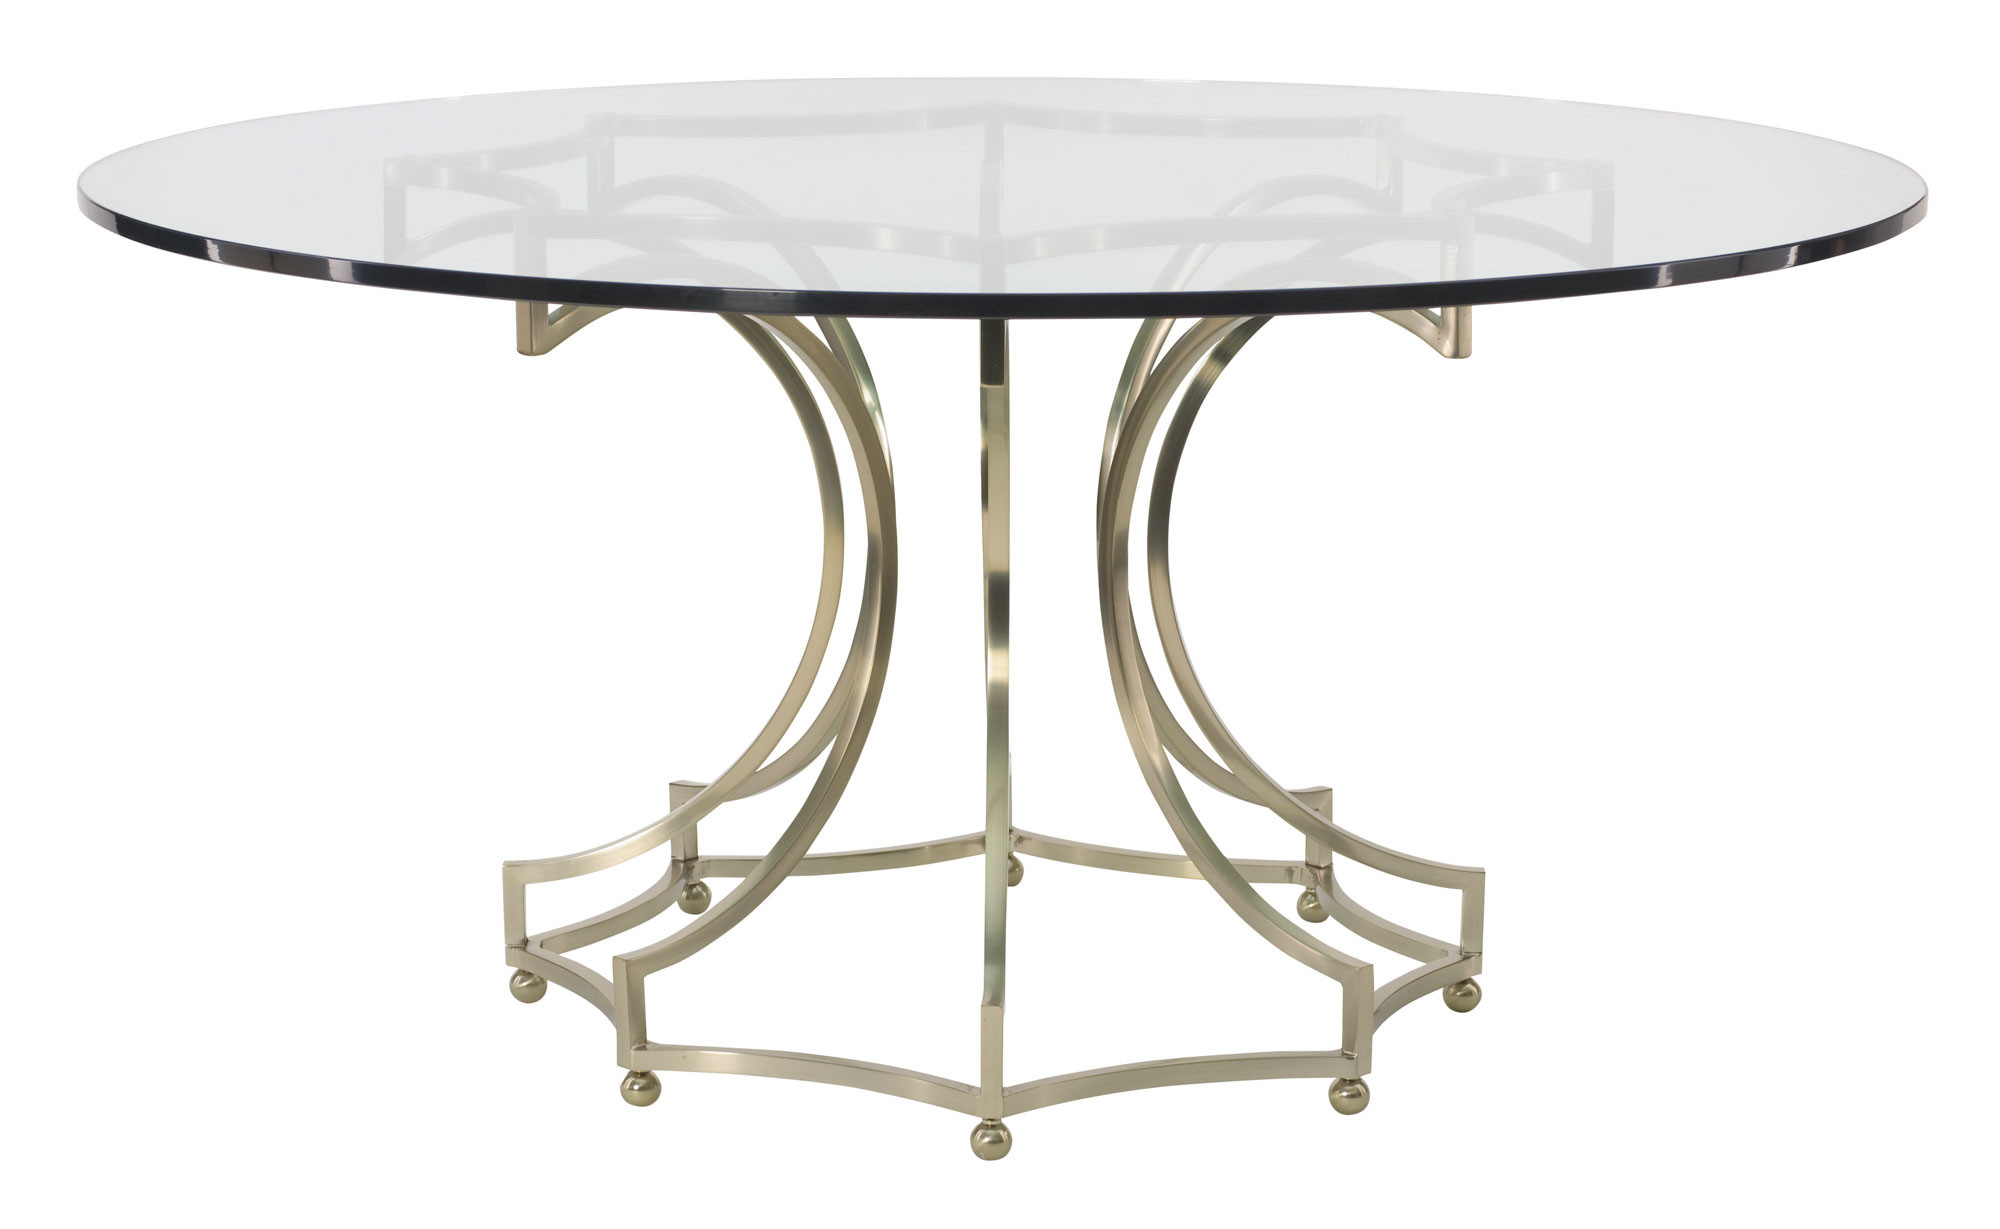 Описание круглого стола. Стол обеденный Scorpio Glass Round b4802. Обеденный стол Палладиум круглый. Стол с металлическими ножками. Круглый стол с металлическими ножками.